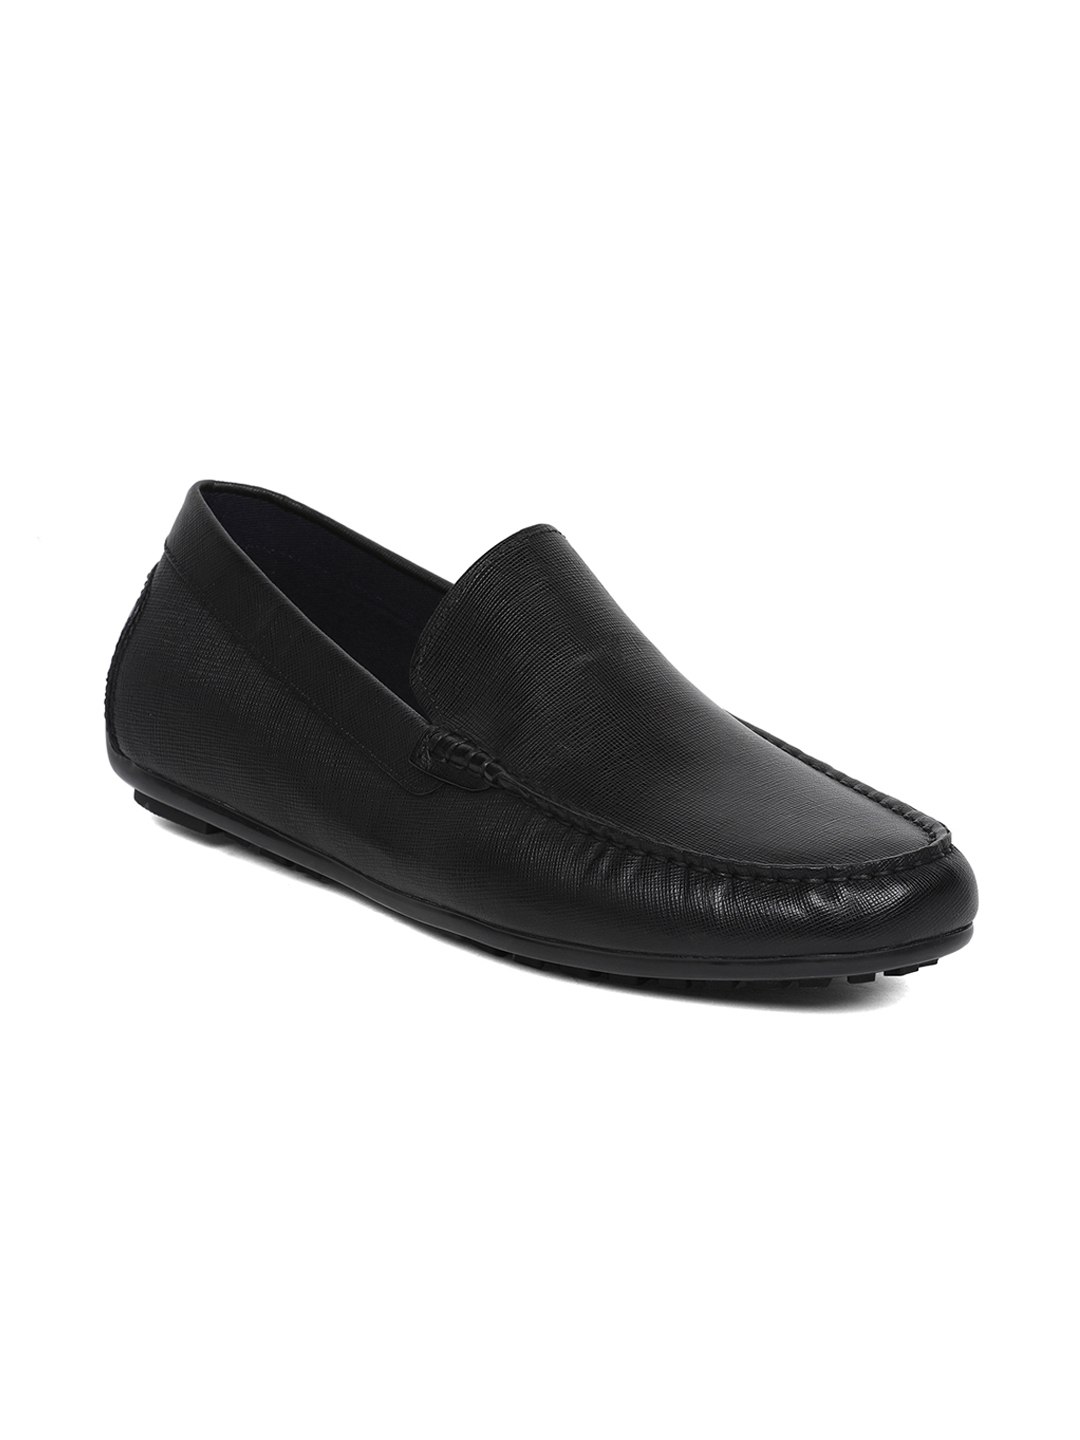 Buy ALDO Men Black Slip On Leather Sneakers - Casual Shoes for Men ...